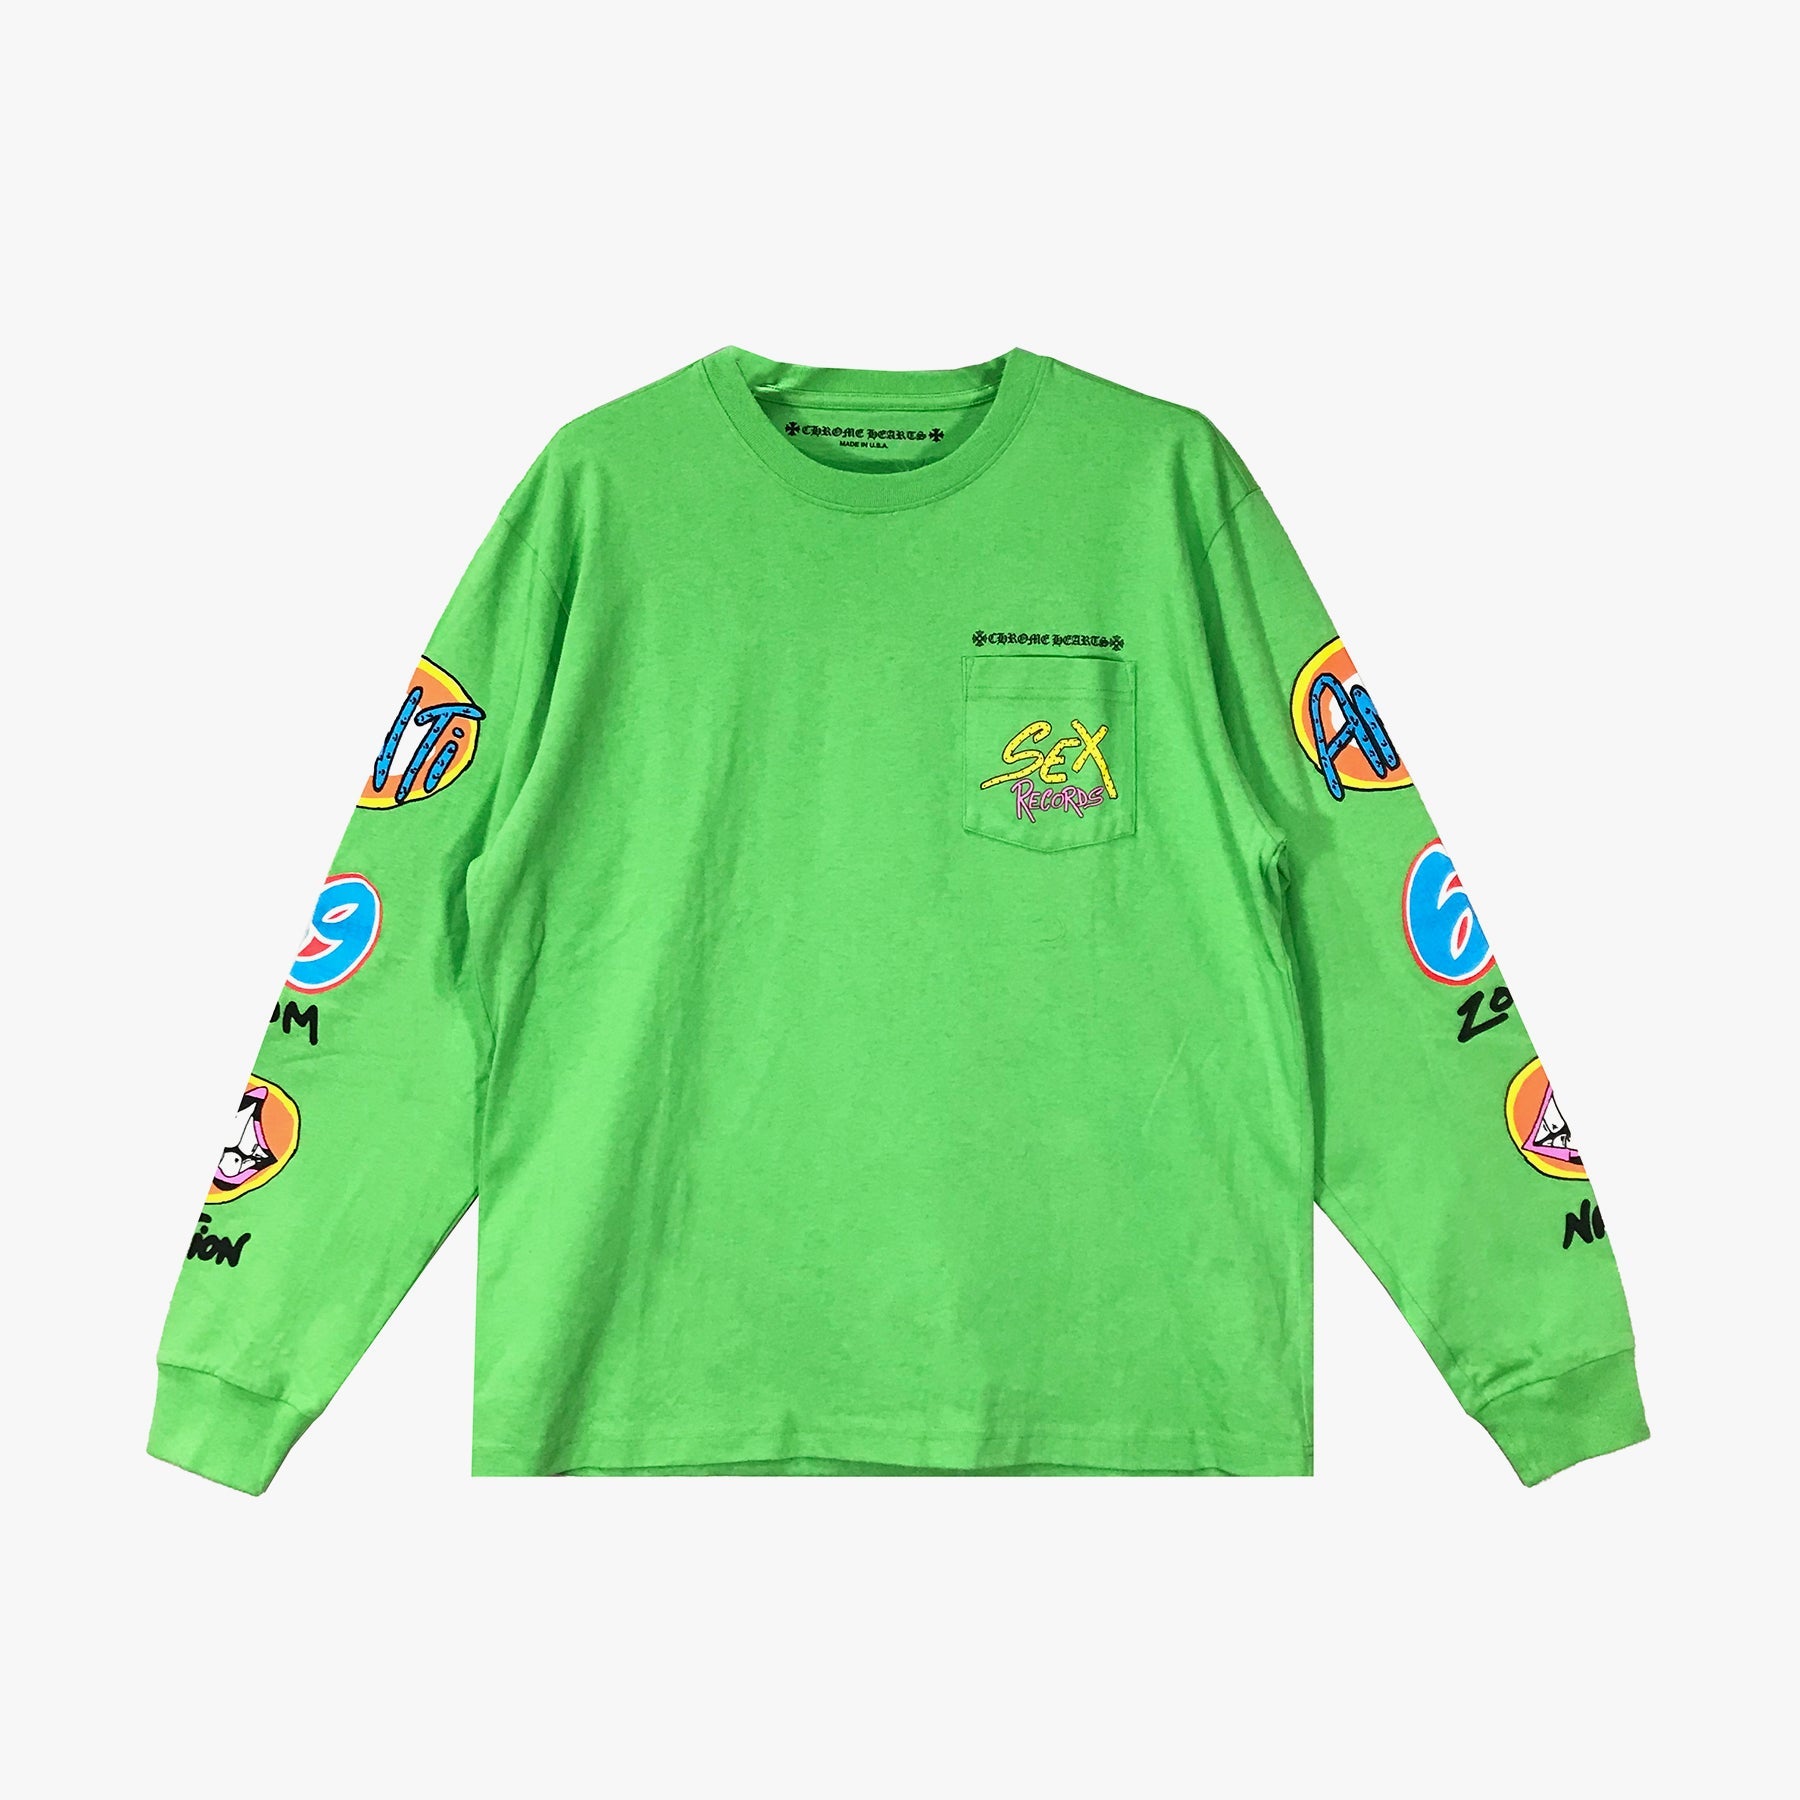 Chrome Hearts Matty Boy Limited Sex Record Green Long Sleeve T-shirt